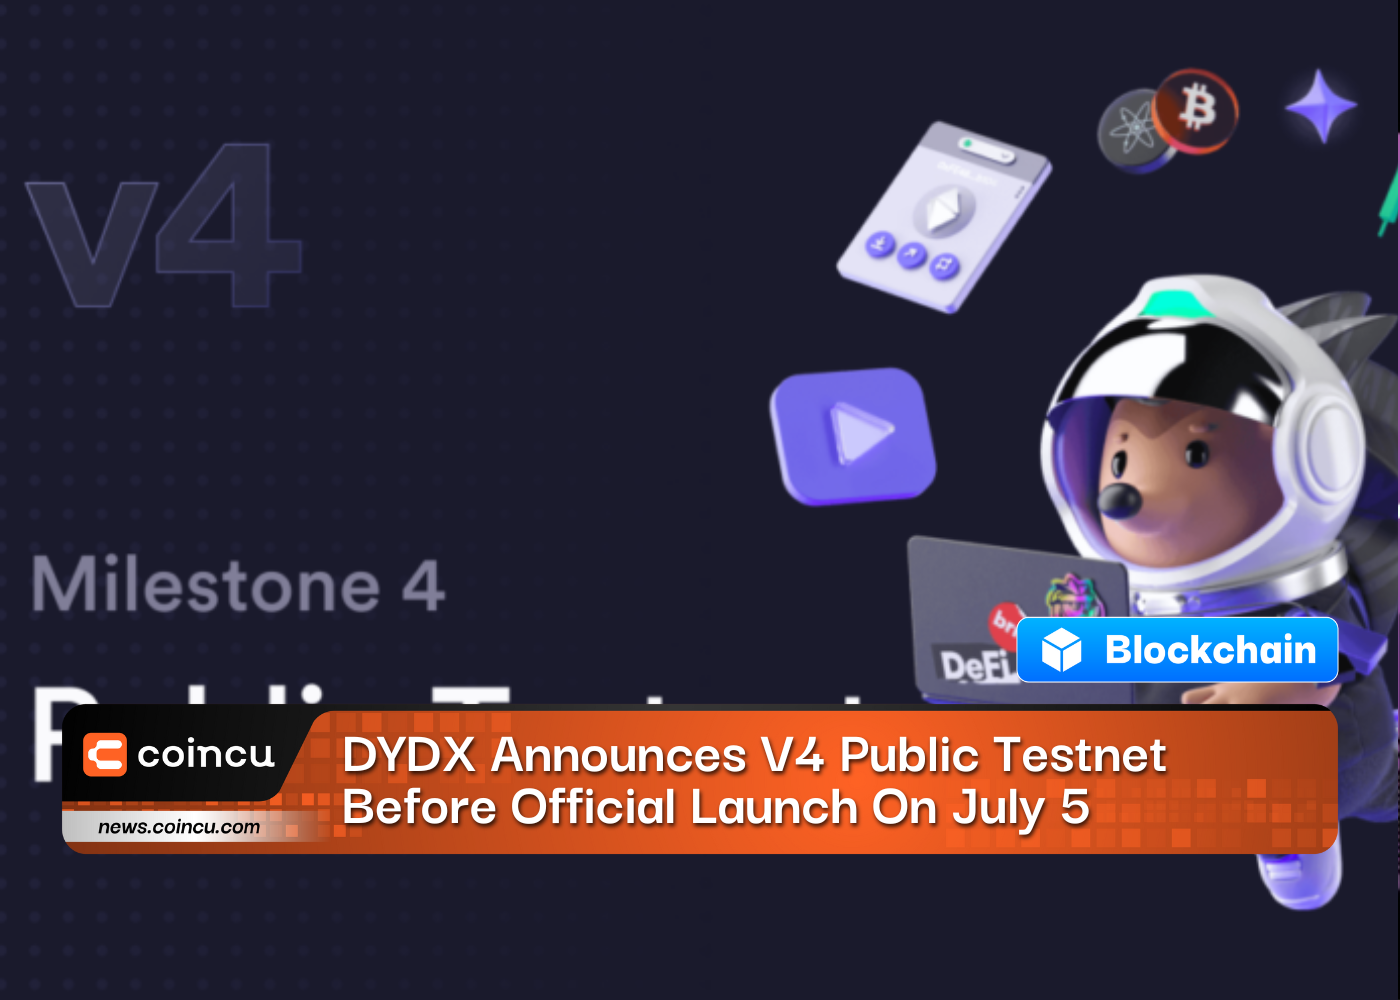 DYDX Announces V4 Public Testnet Before Official Launch On July 5